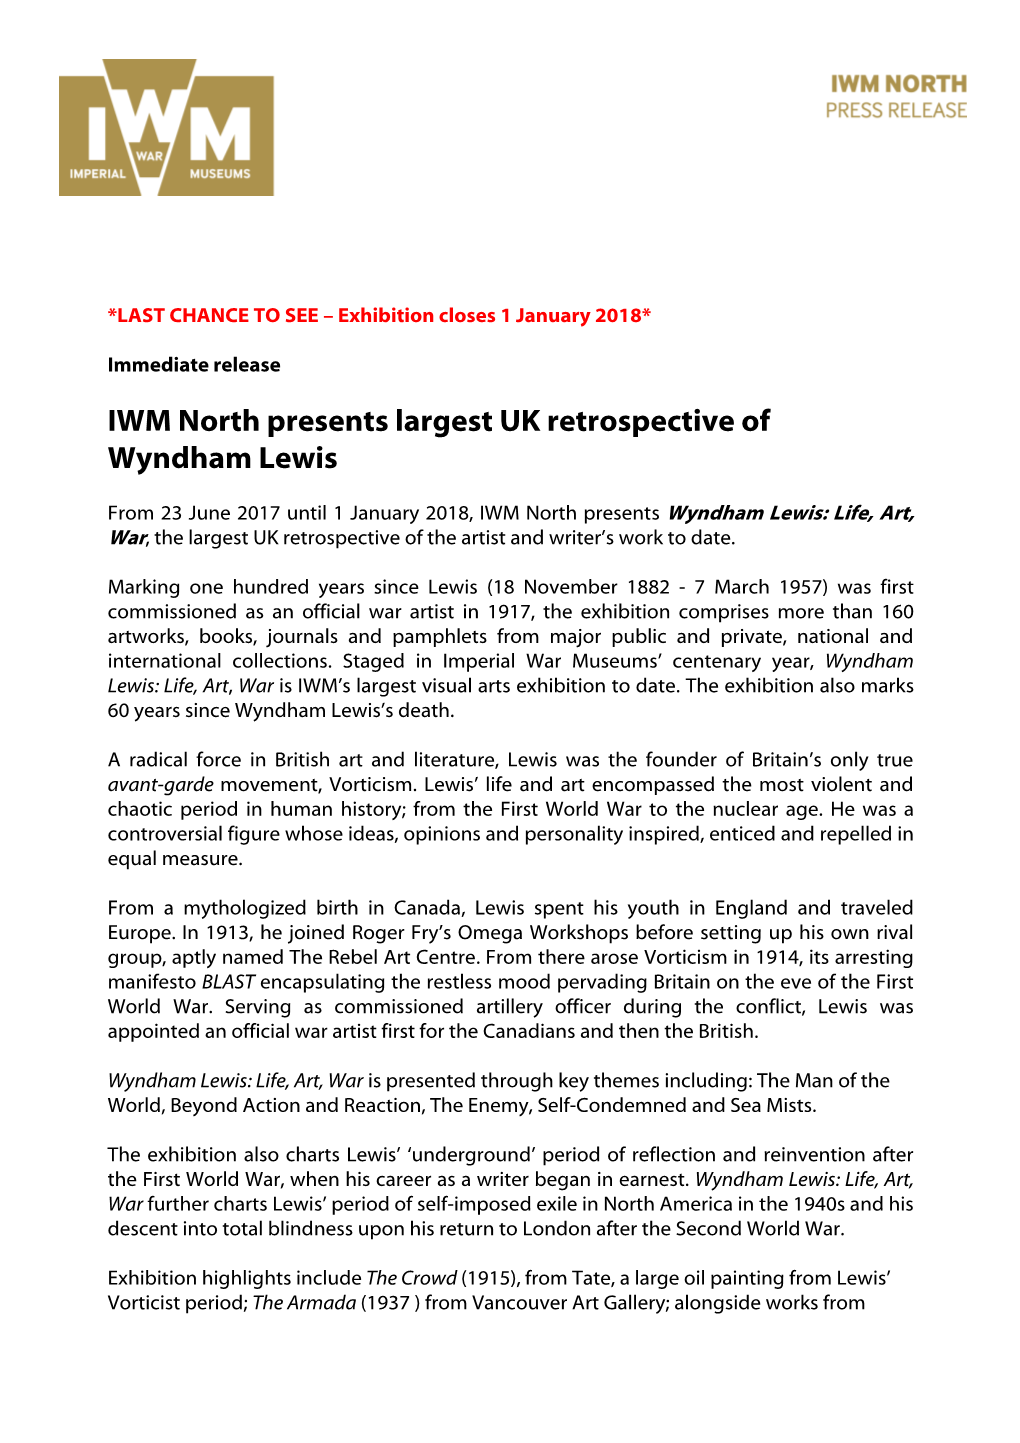 IWM North Presents Largest UK Retrospective of Wyndham Lewis